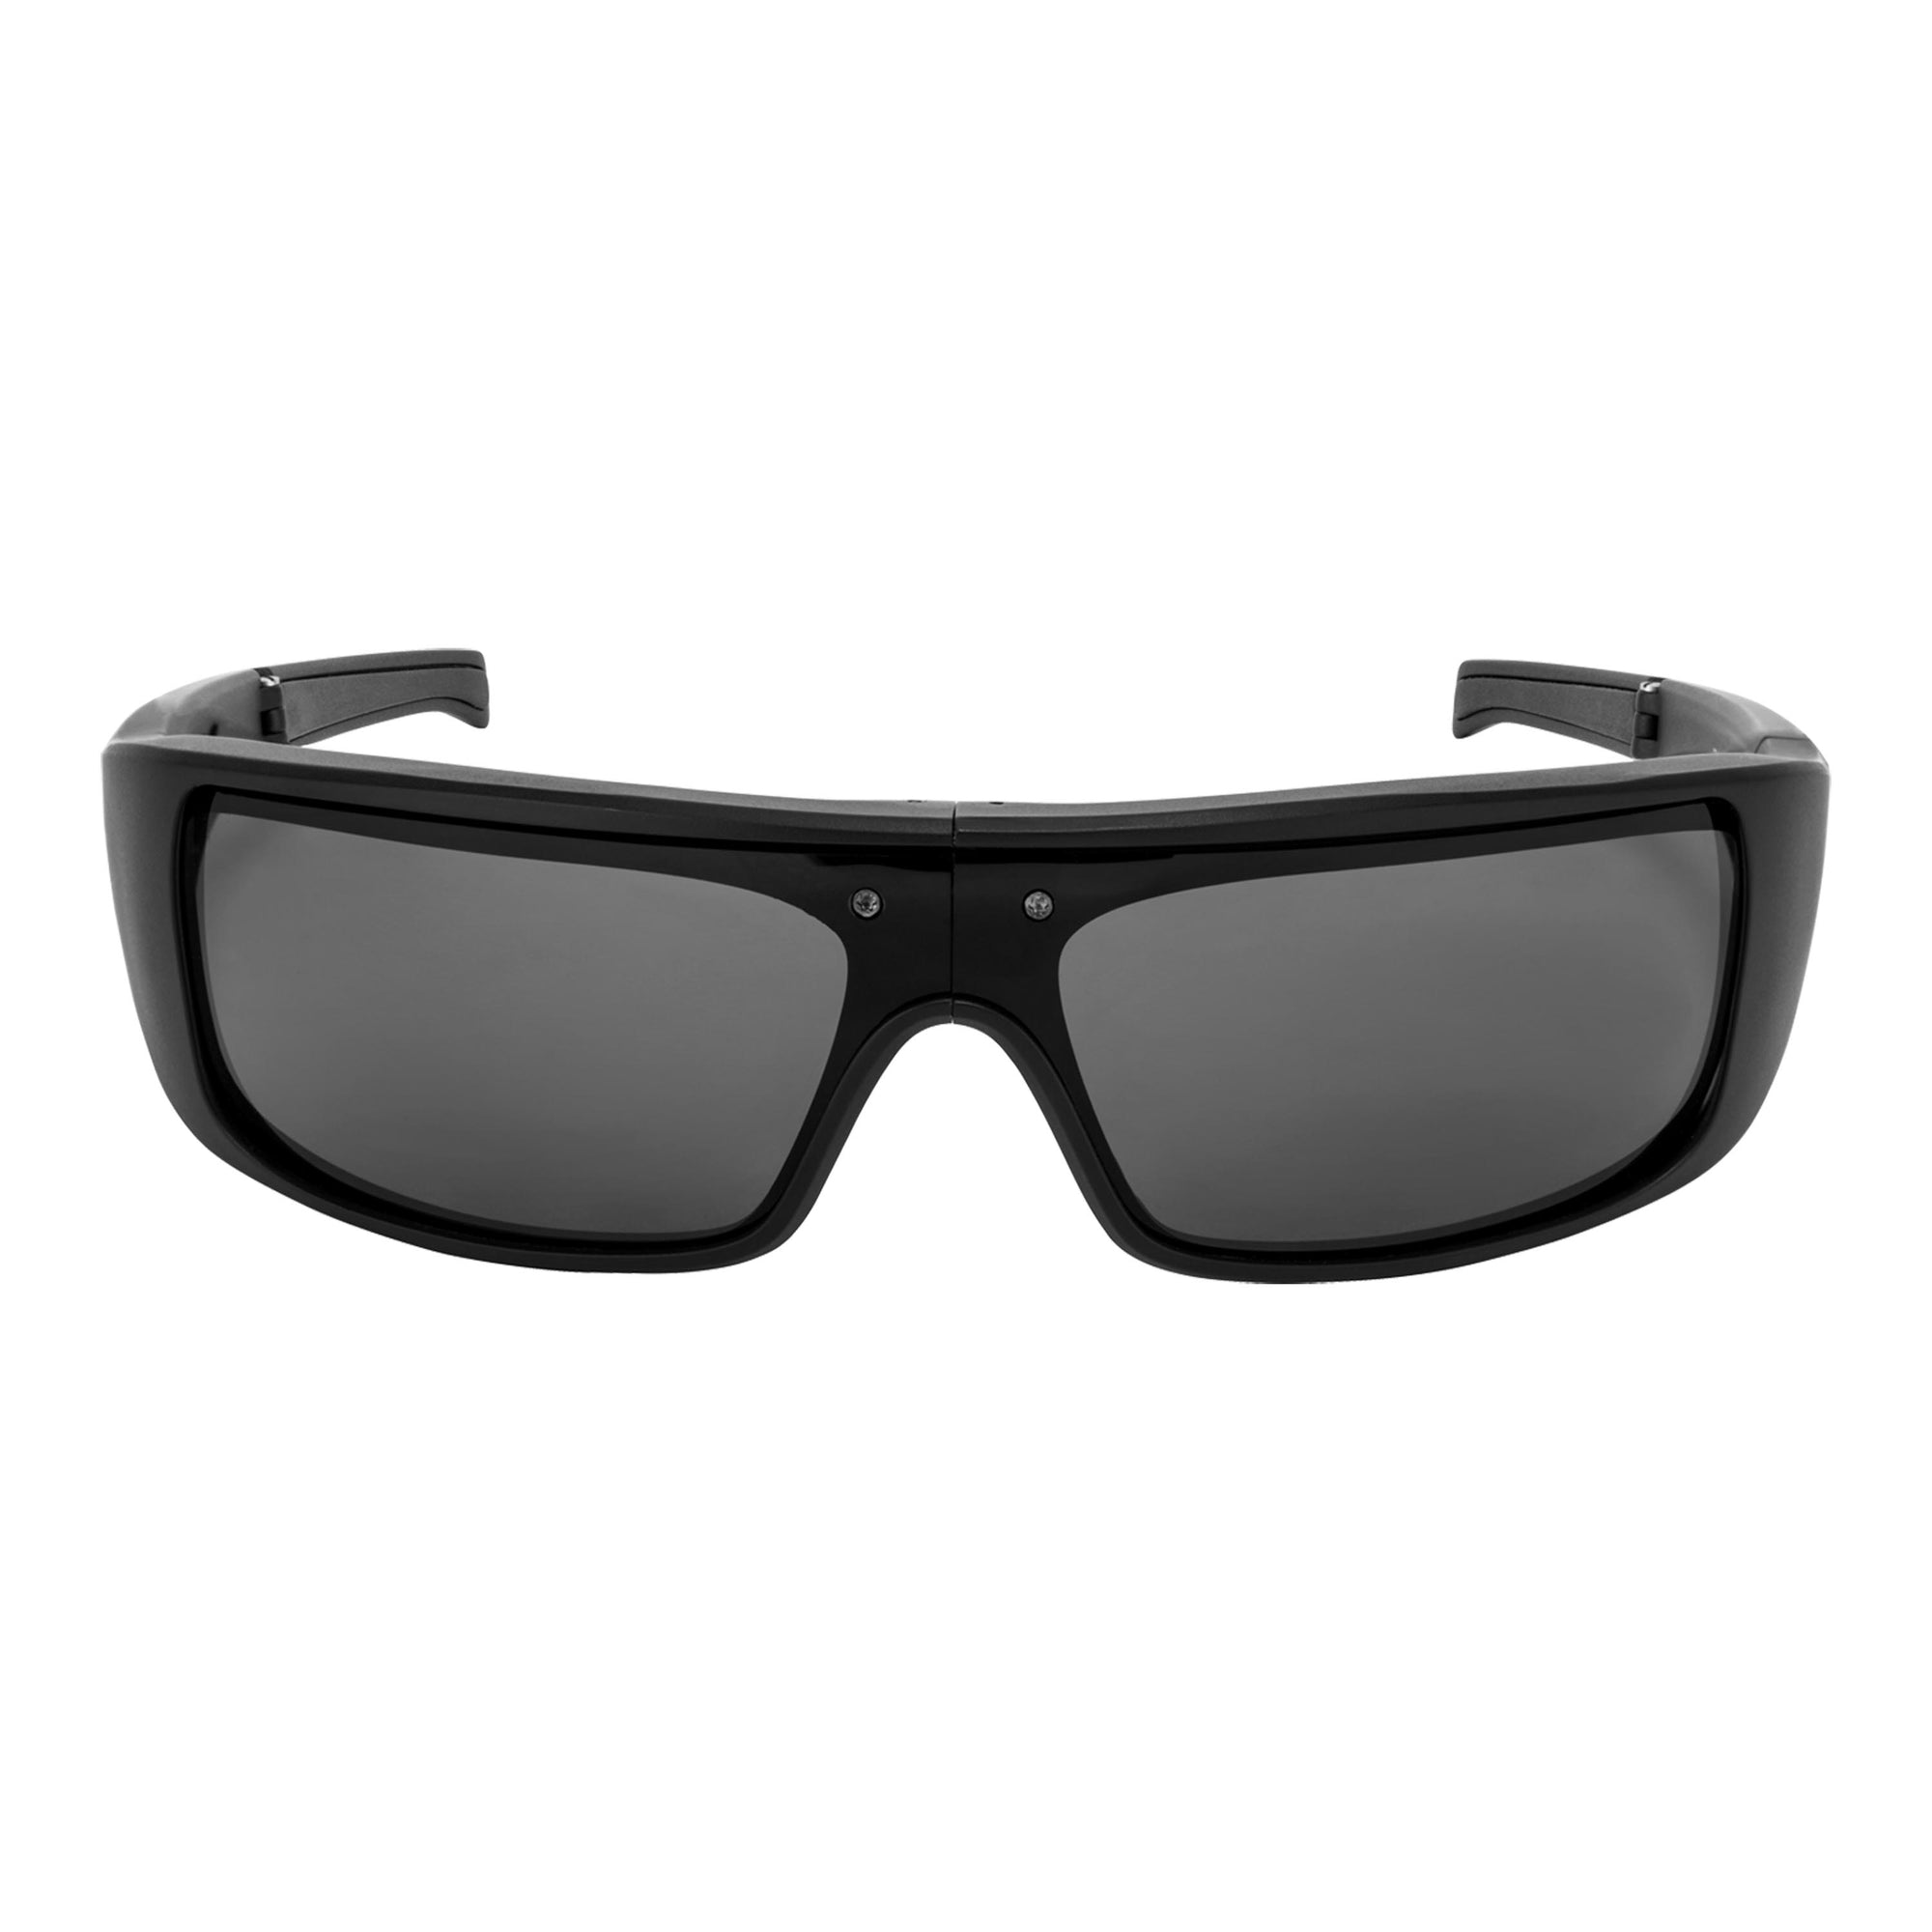 Popticals, Premium Compact Sunglasses, PopGear, 010050-BMGS, Standard Sunglasses, Matte Black Frames, Gray Lenses, Glam View